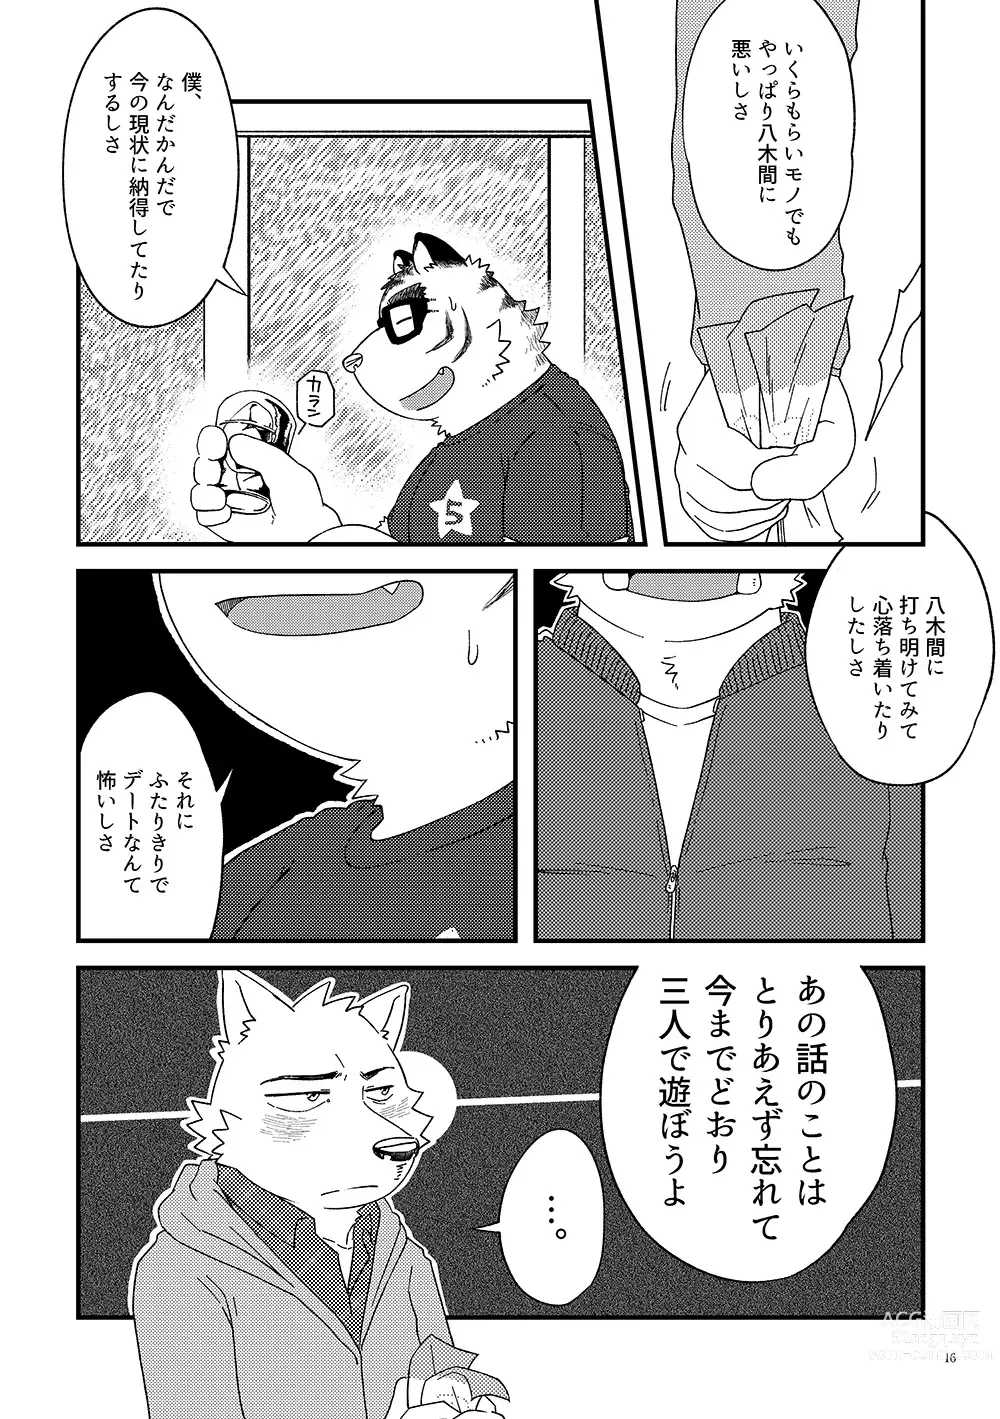 Page 17 of doujinshi Sanbunnoichi Vol 2: Datte sukidakara.